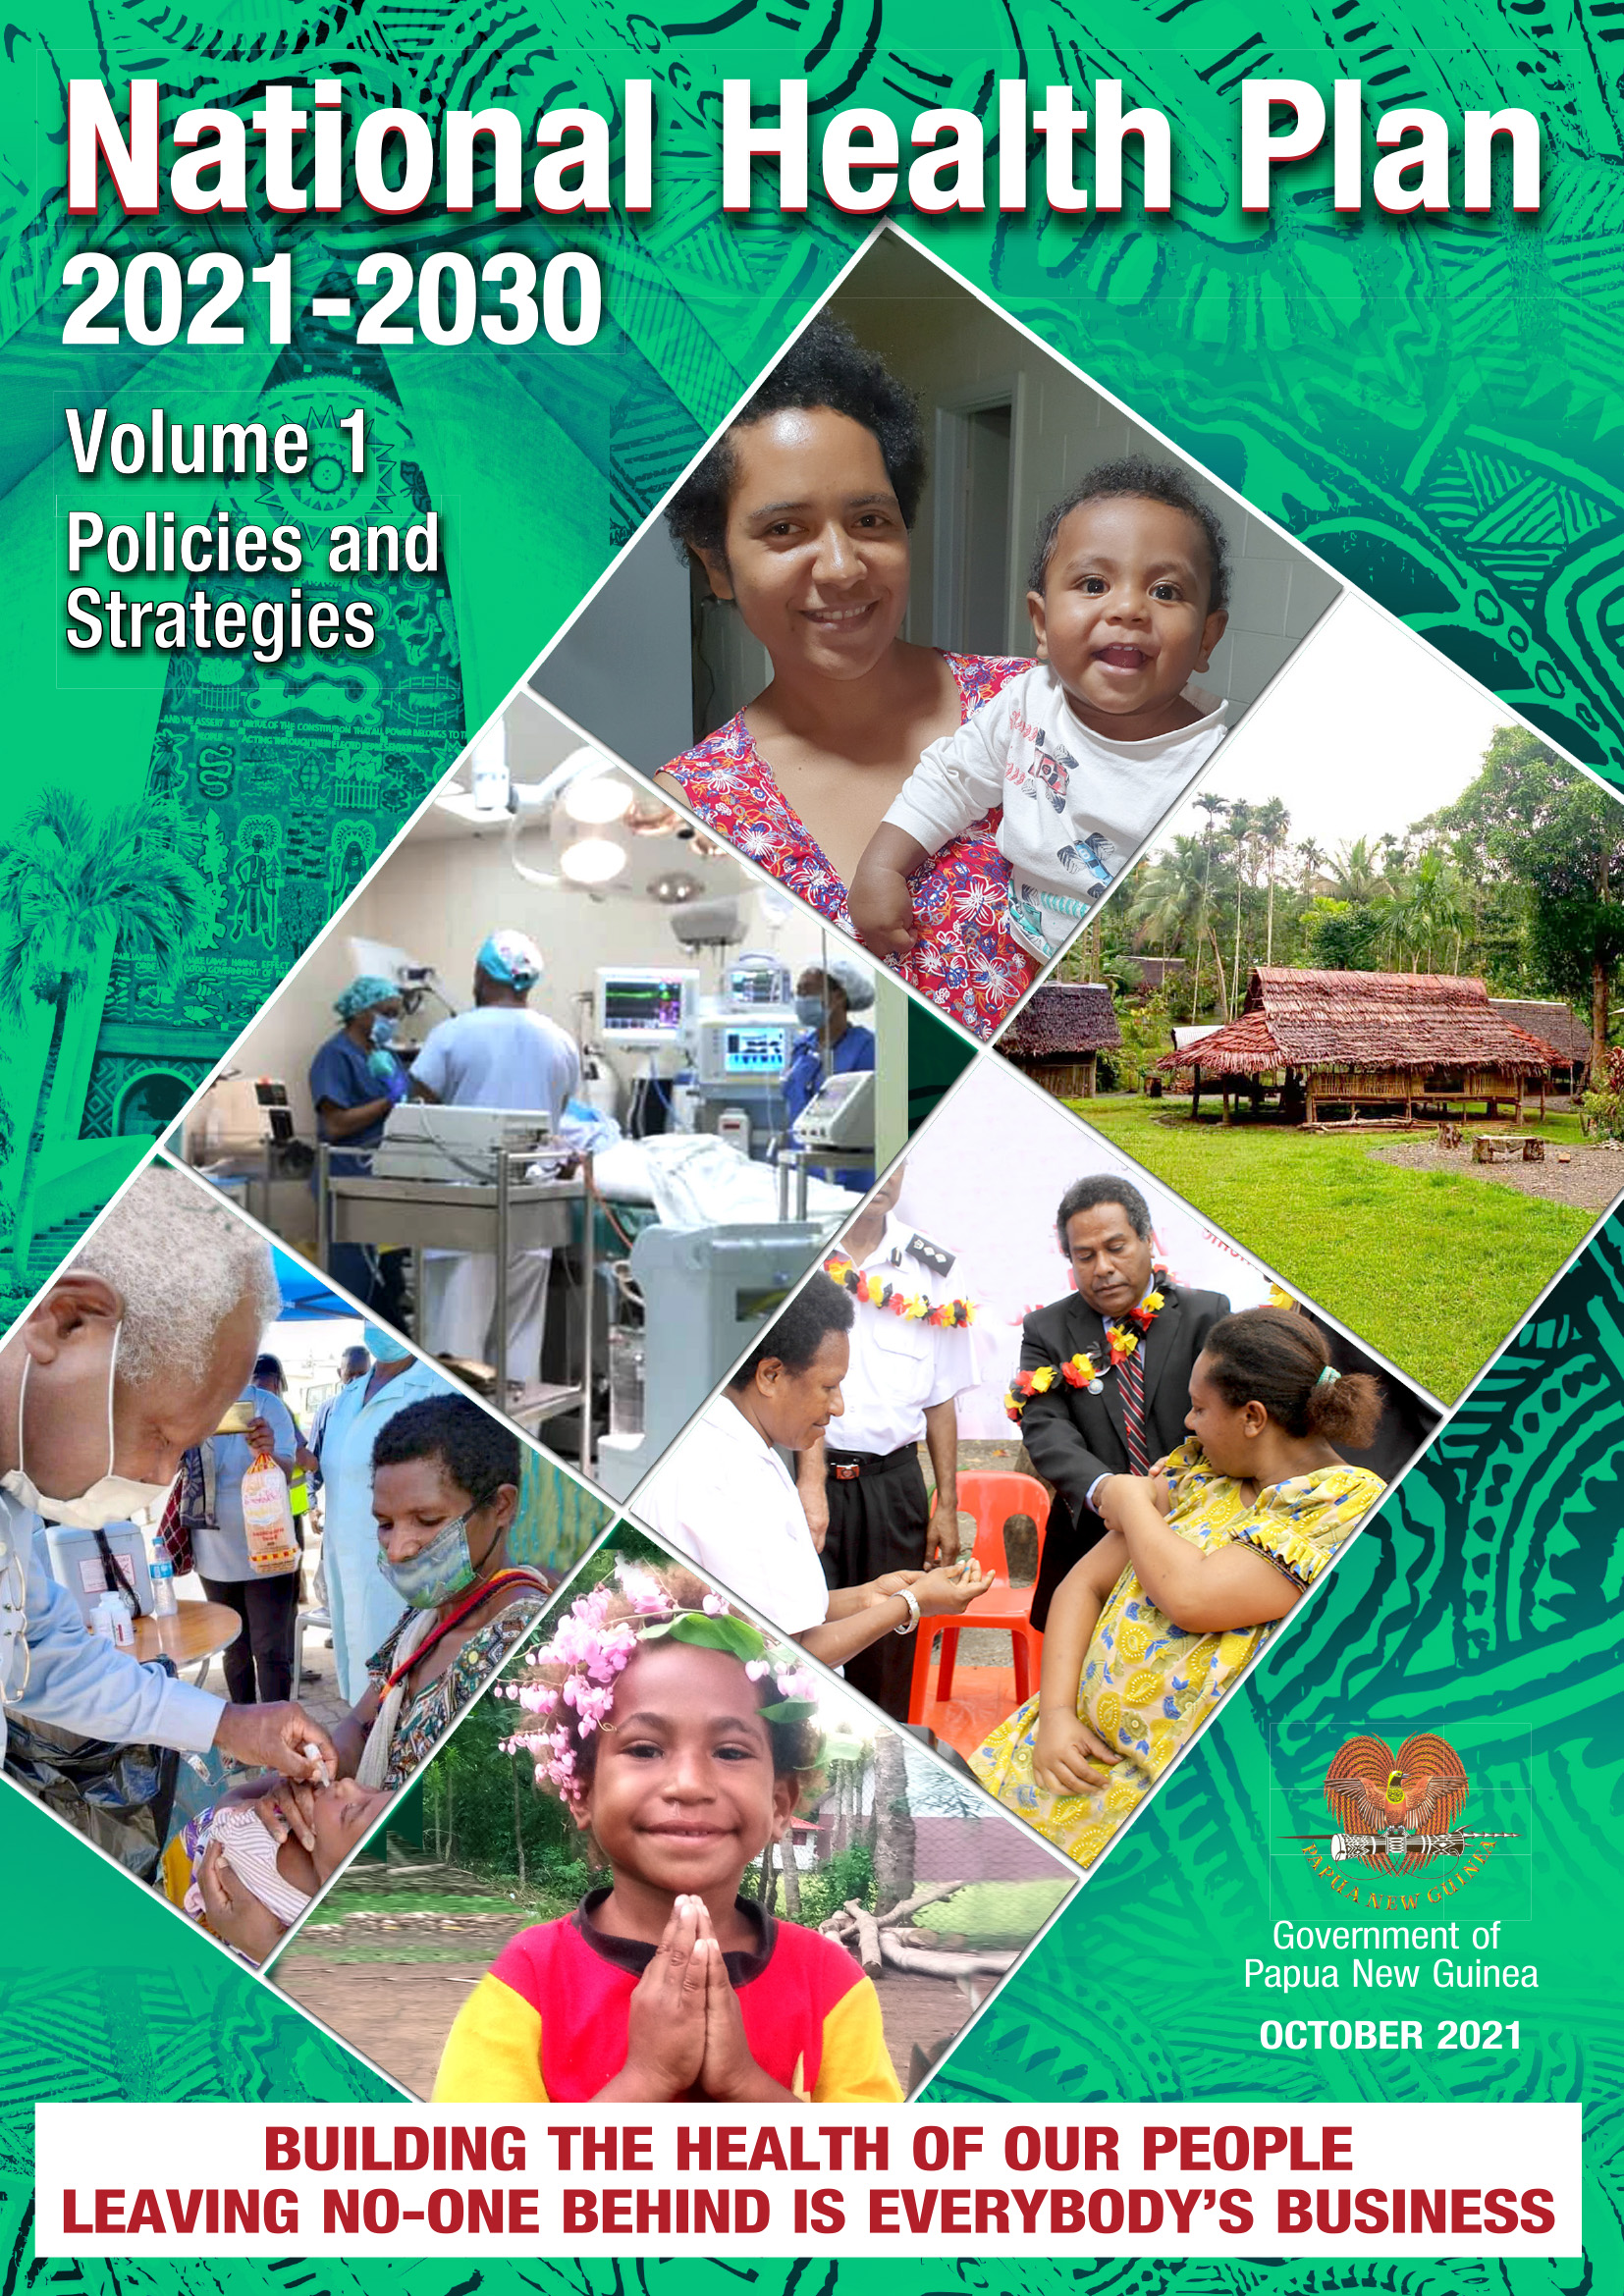 Plano nacional de saúde 2021-2030, volume 1 